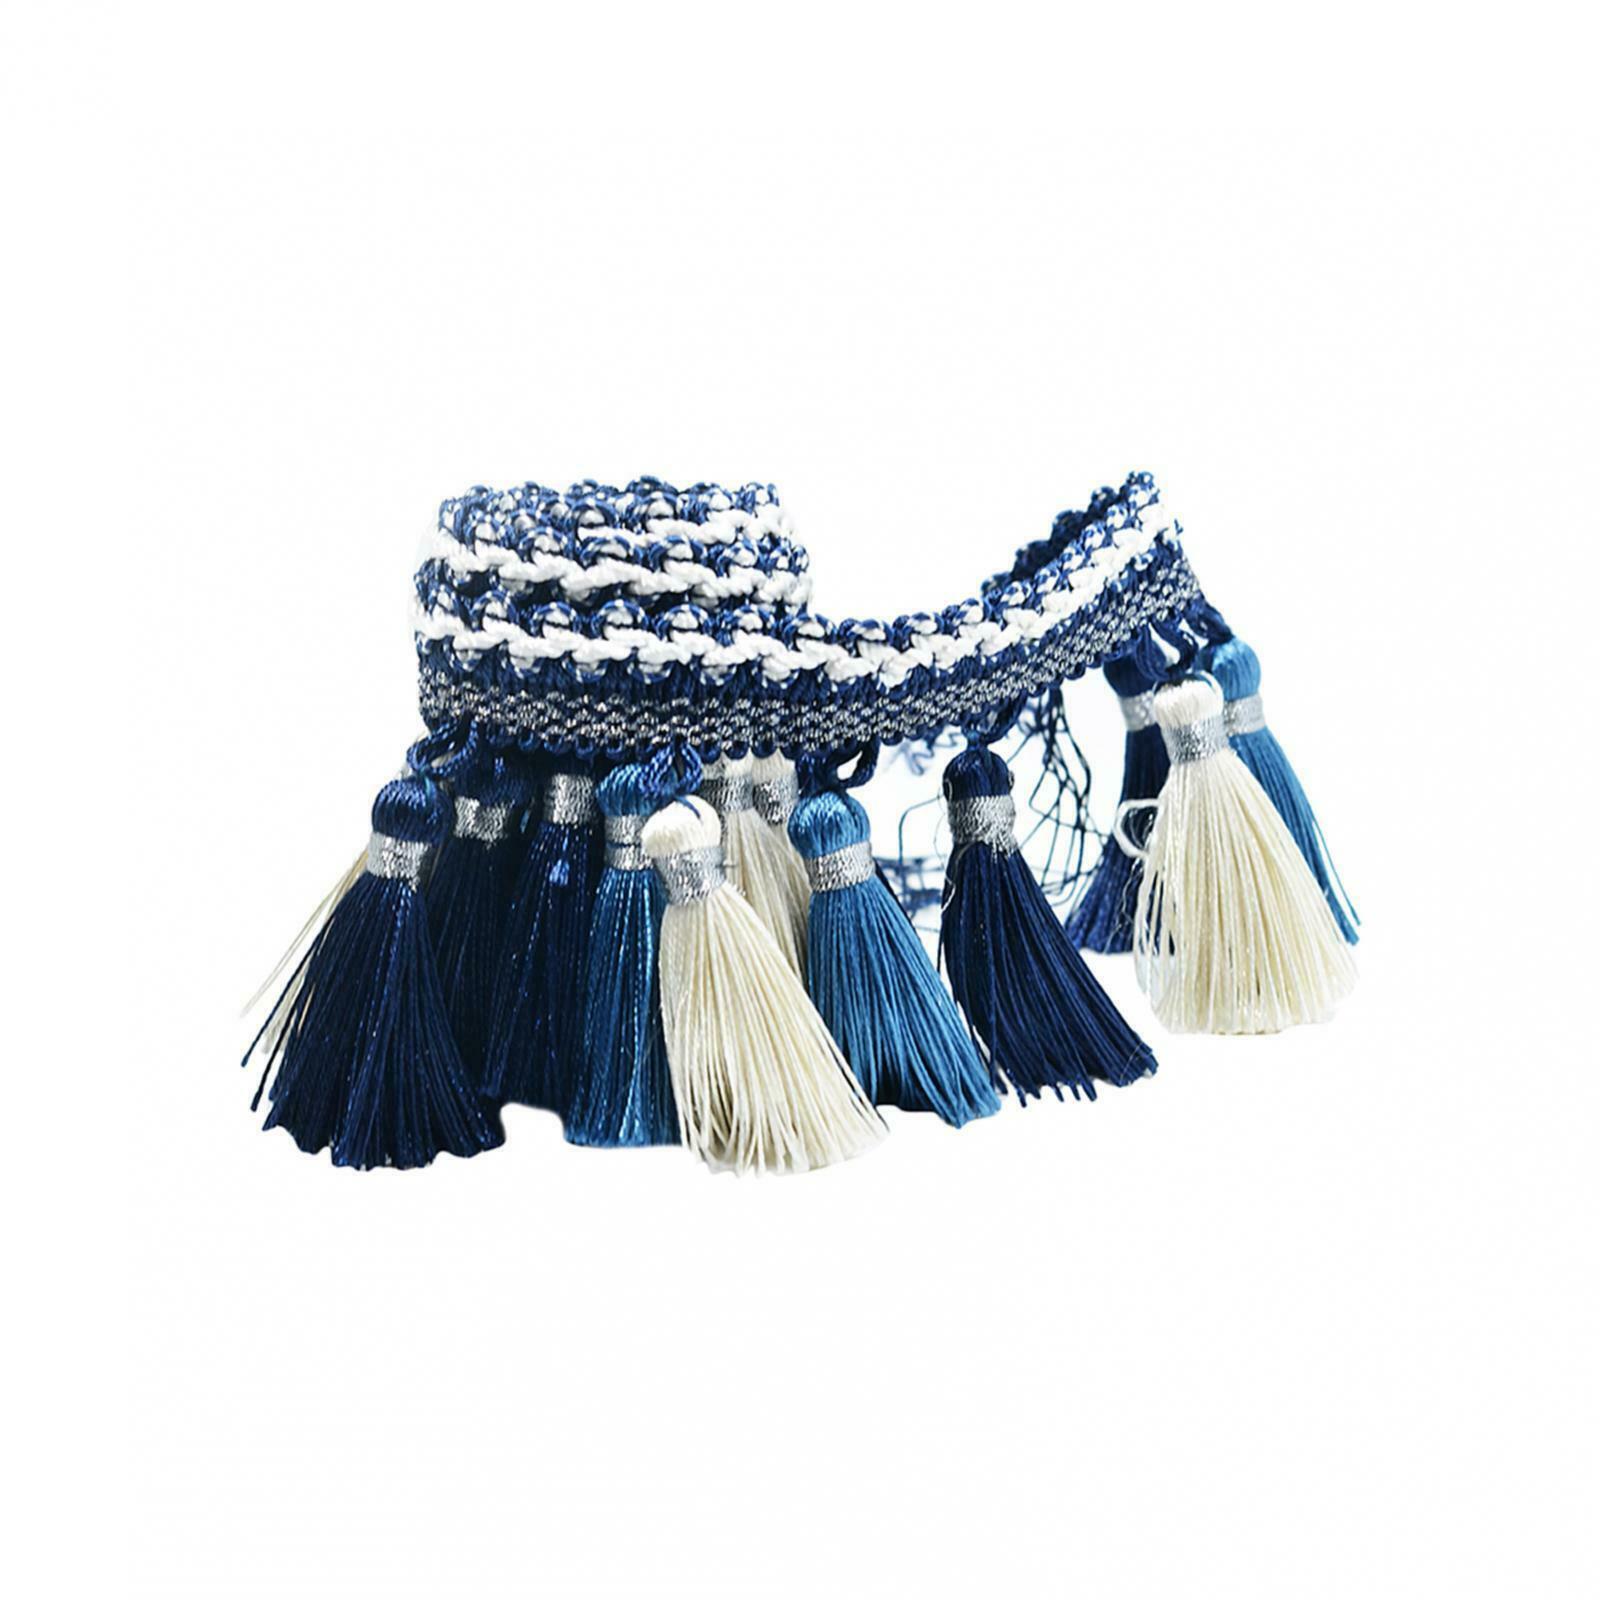 1 Yard European Clothing Curtain Tassel Edge Fringe Trim Embellishment Blue